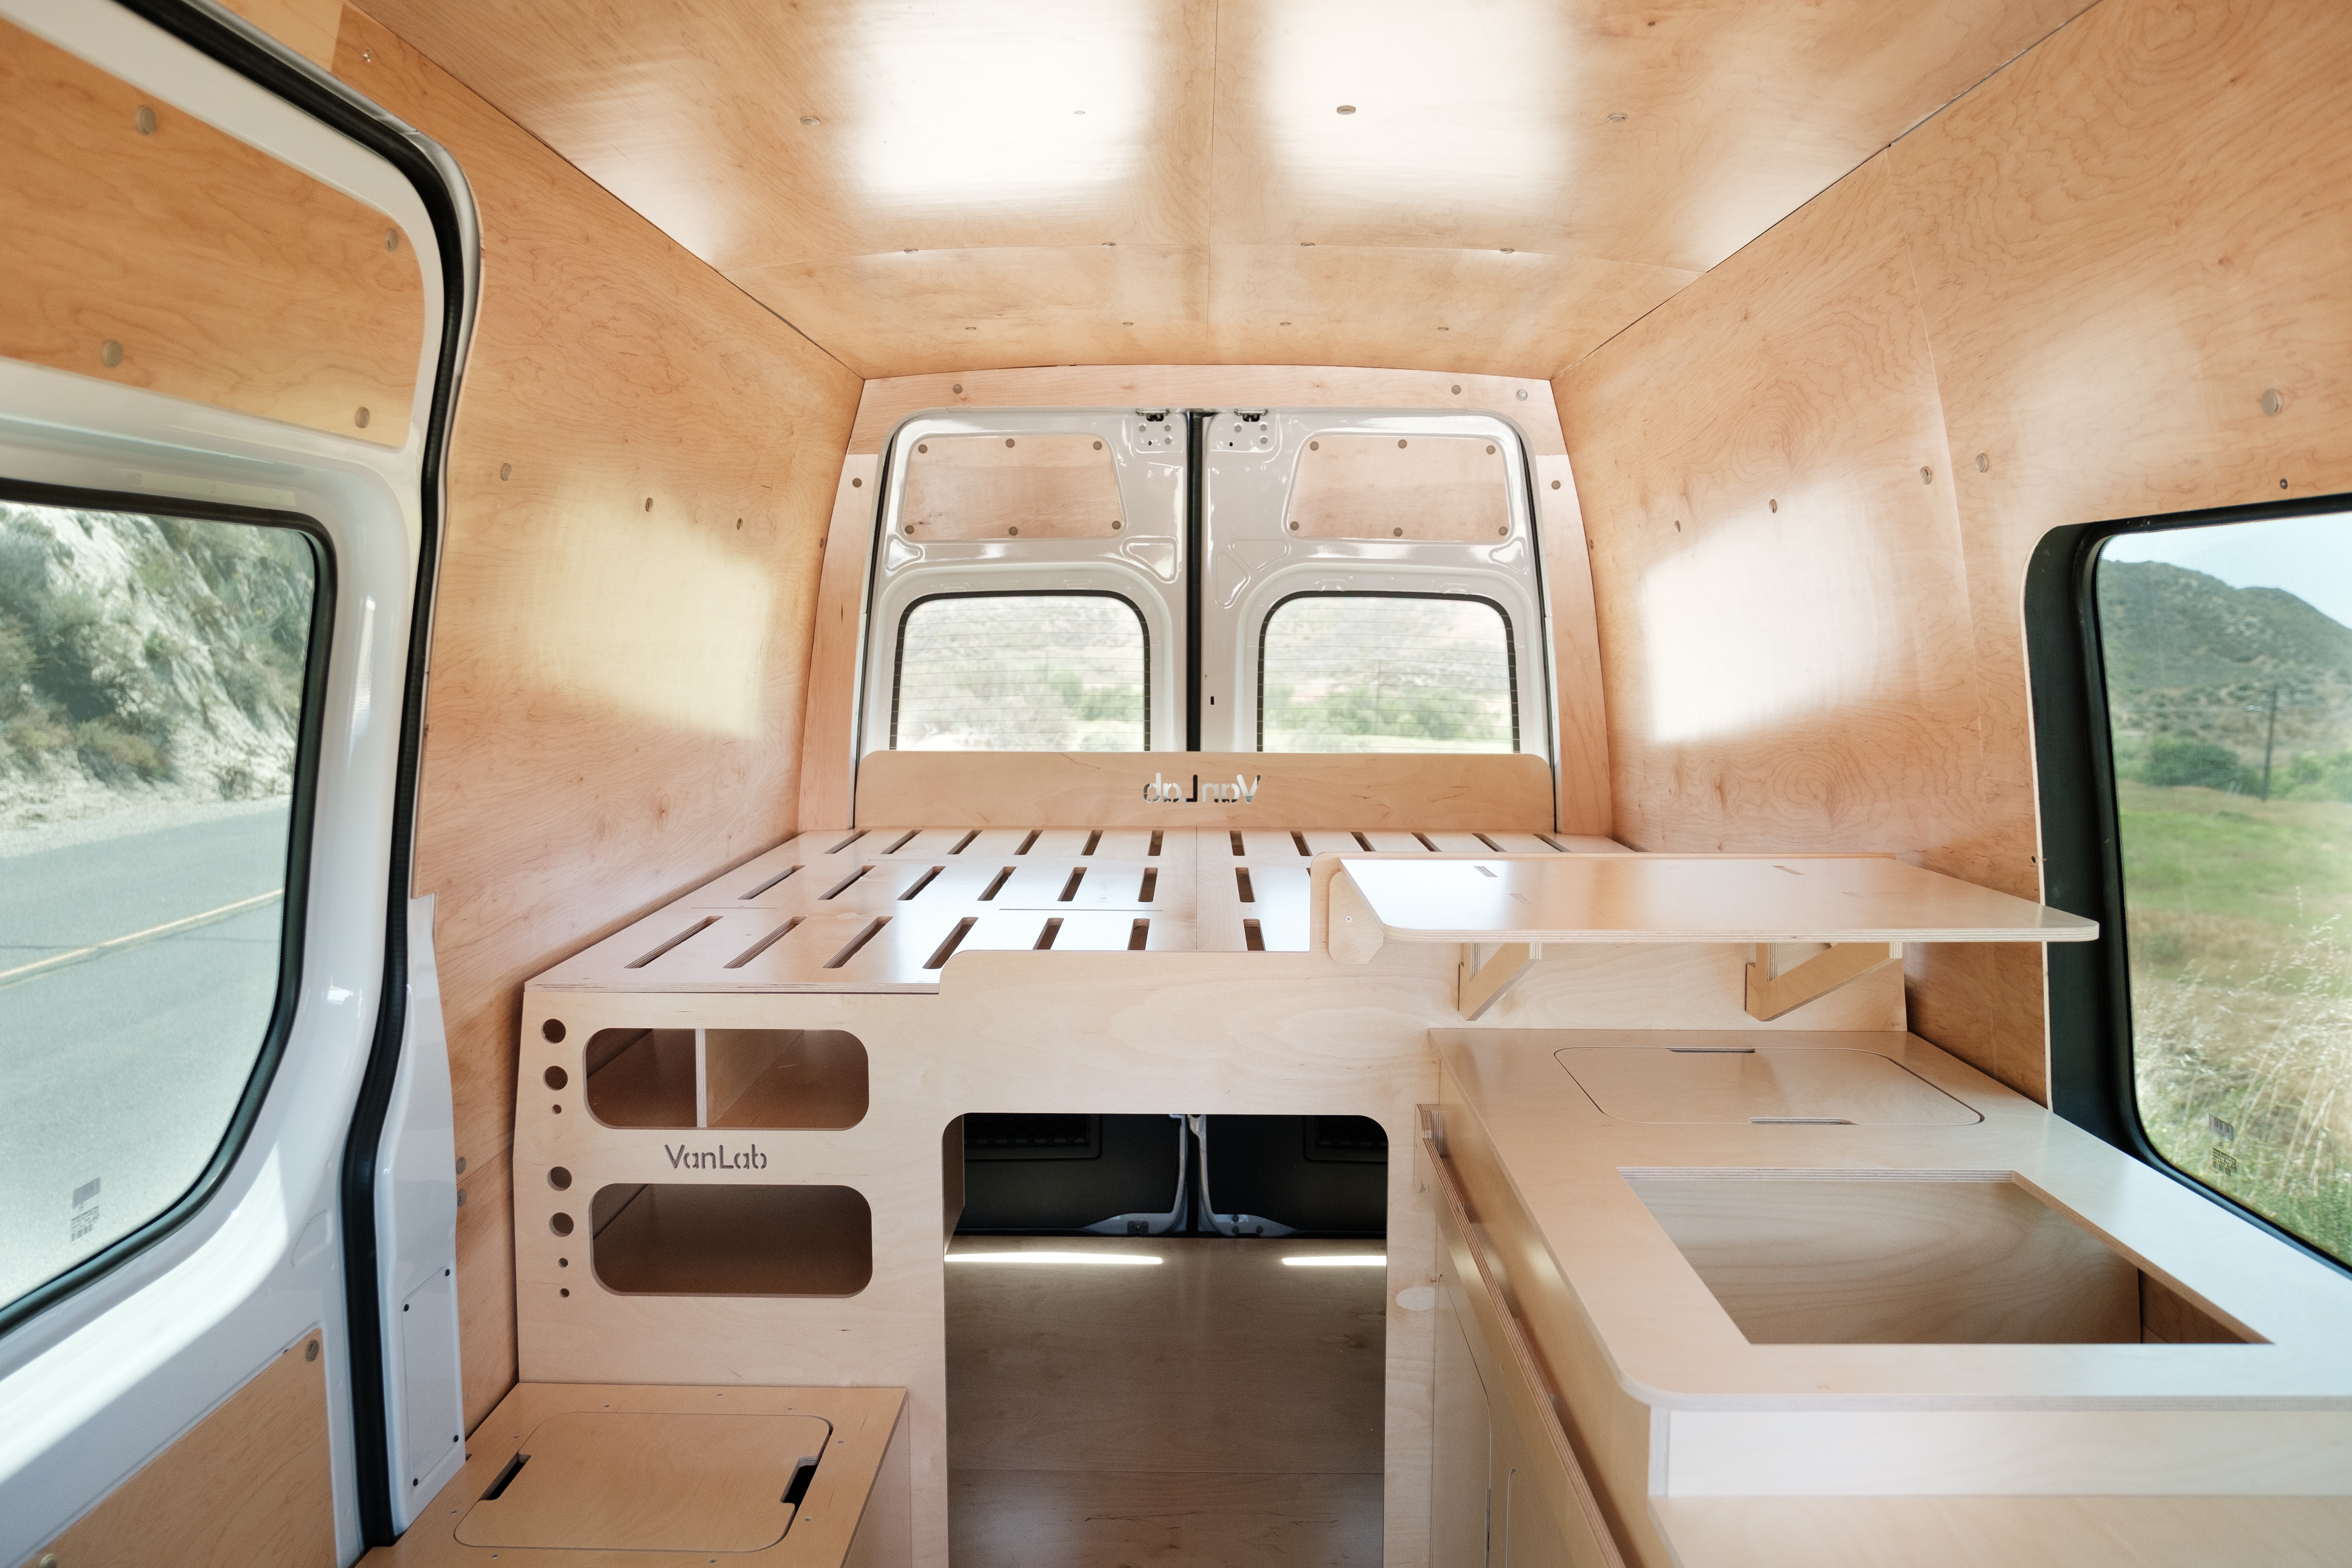 VanLab USA - Flatpack DIY conversion kits for vans